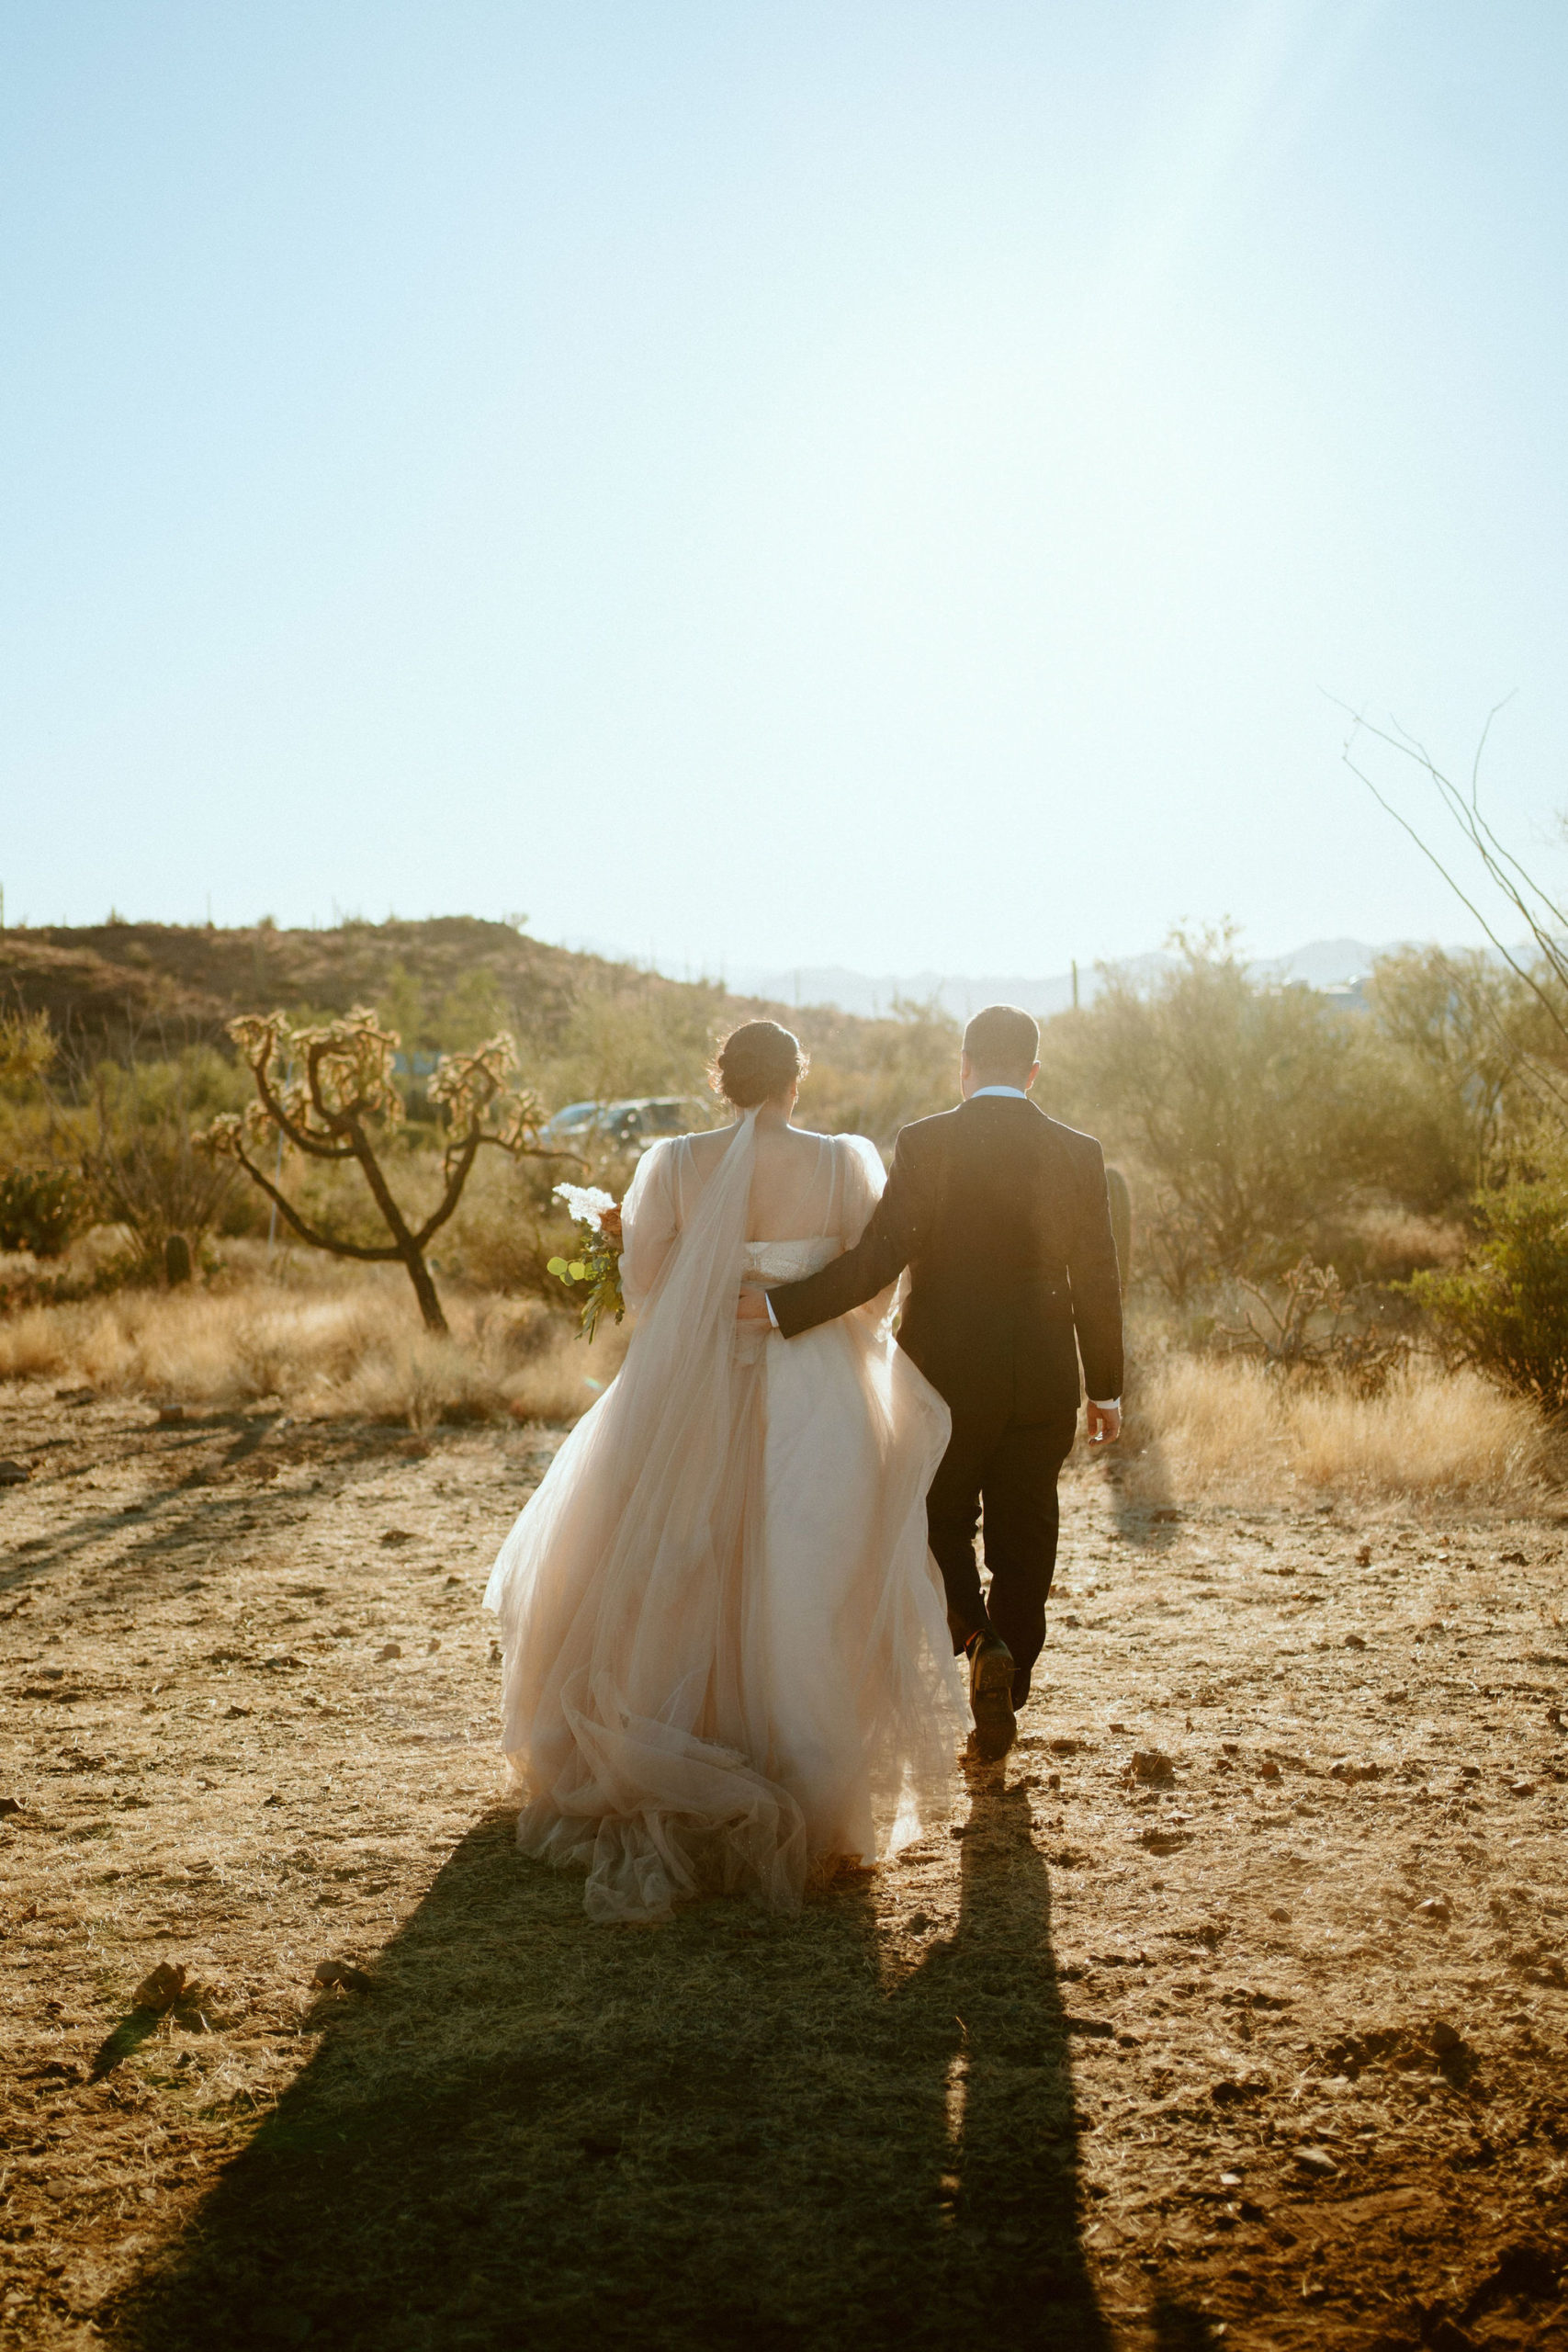 Saguaro National Park Micro-Wedding. The newlyweds walking off into the sunset desert